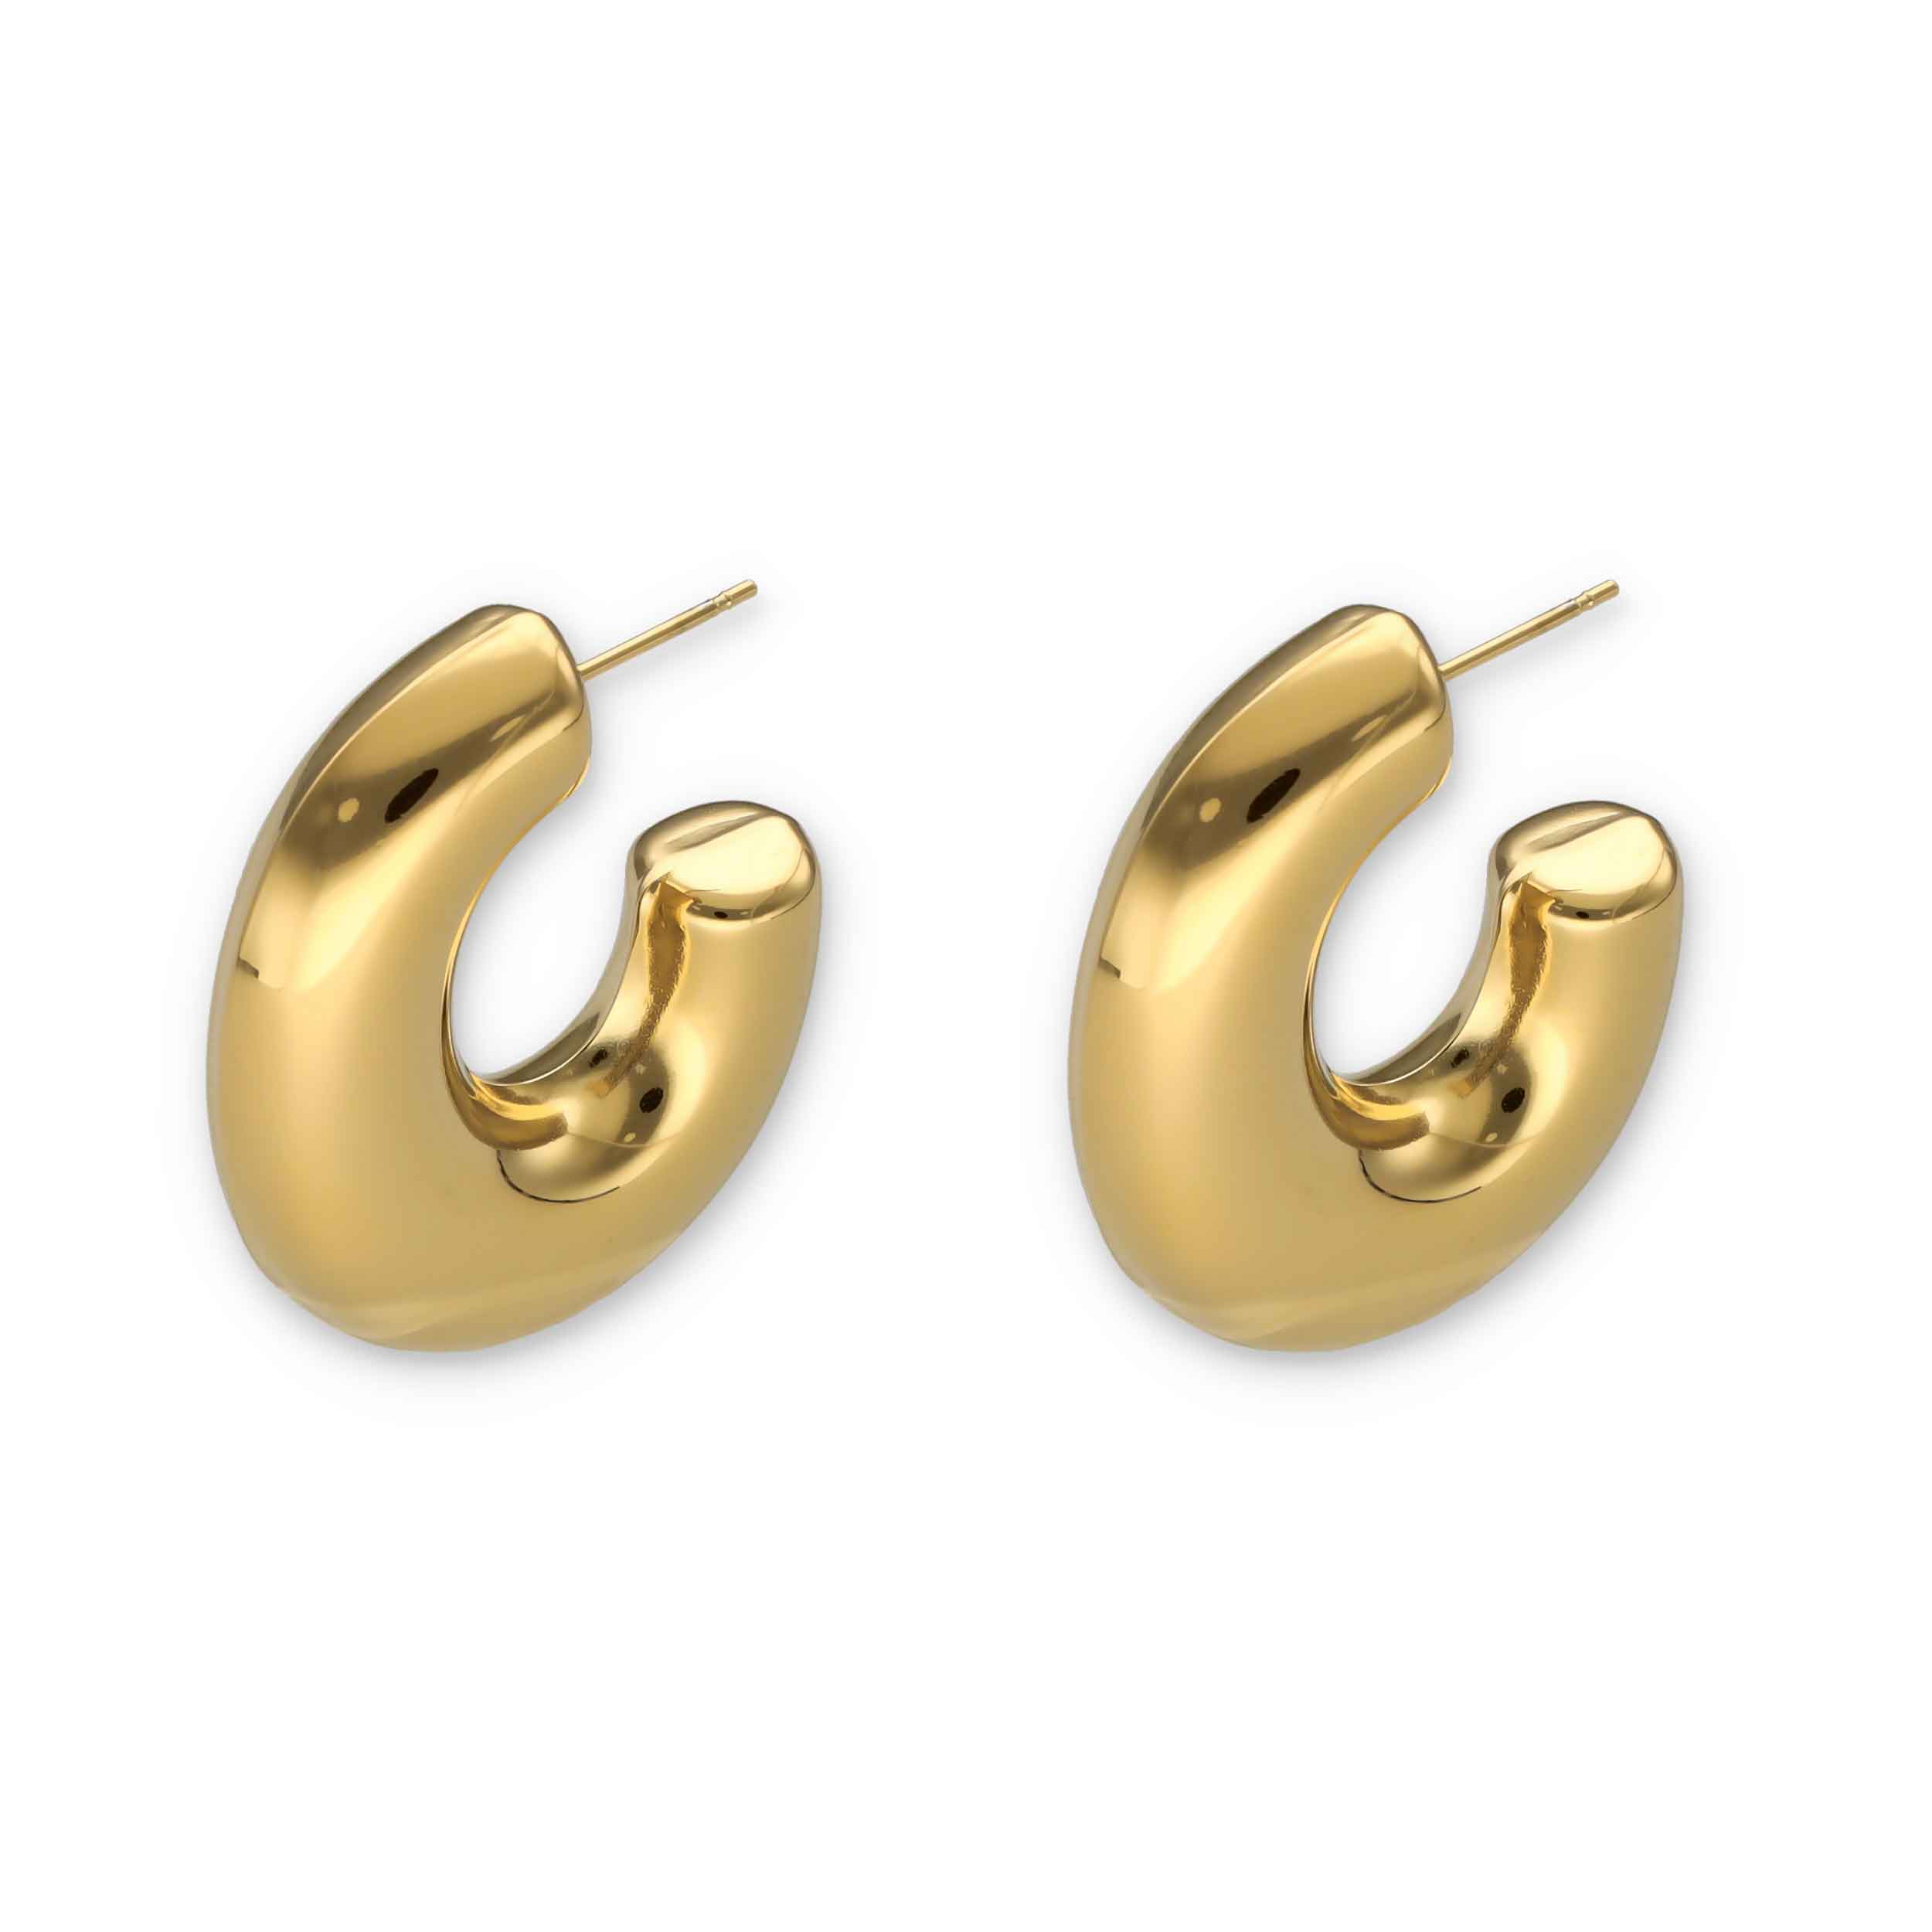 Massive schwere Statement-Ohrringe, Creolen aus vergoldetem Edelstahl, trendige Form, von Schmucktick. 